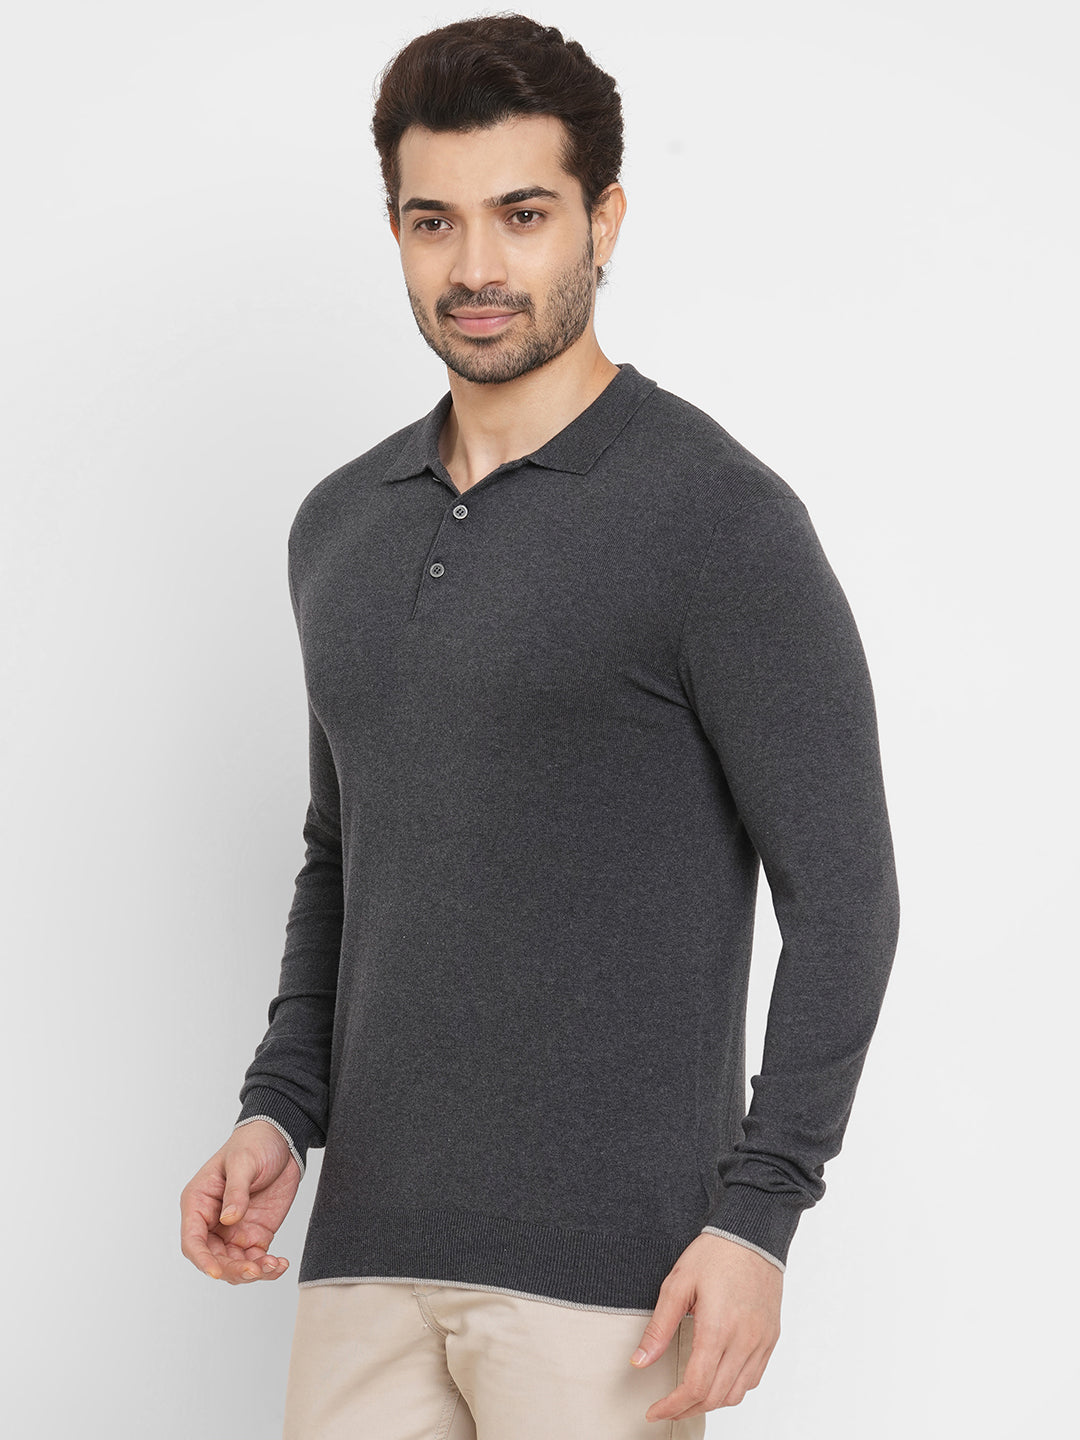 Men's Cotton Blend Charcoal Regular Fit Long Sleeved Tshirt